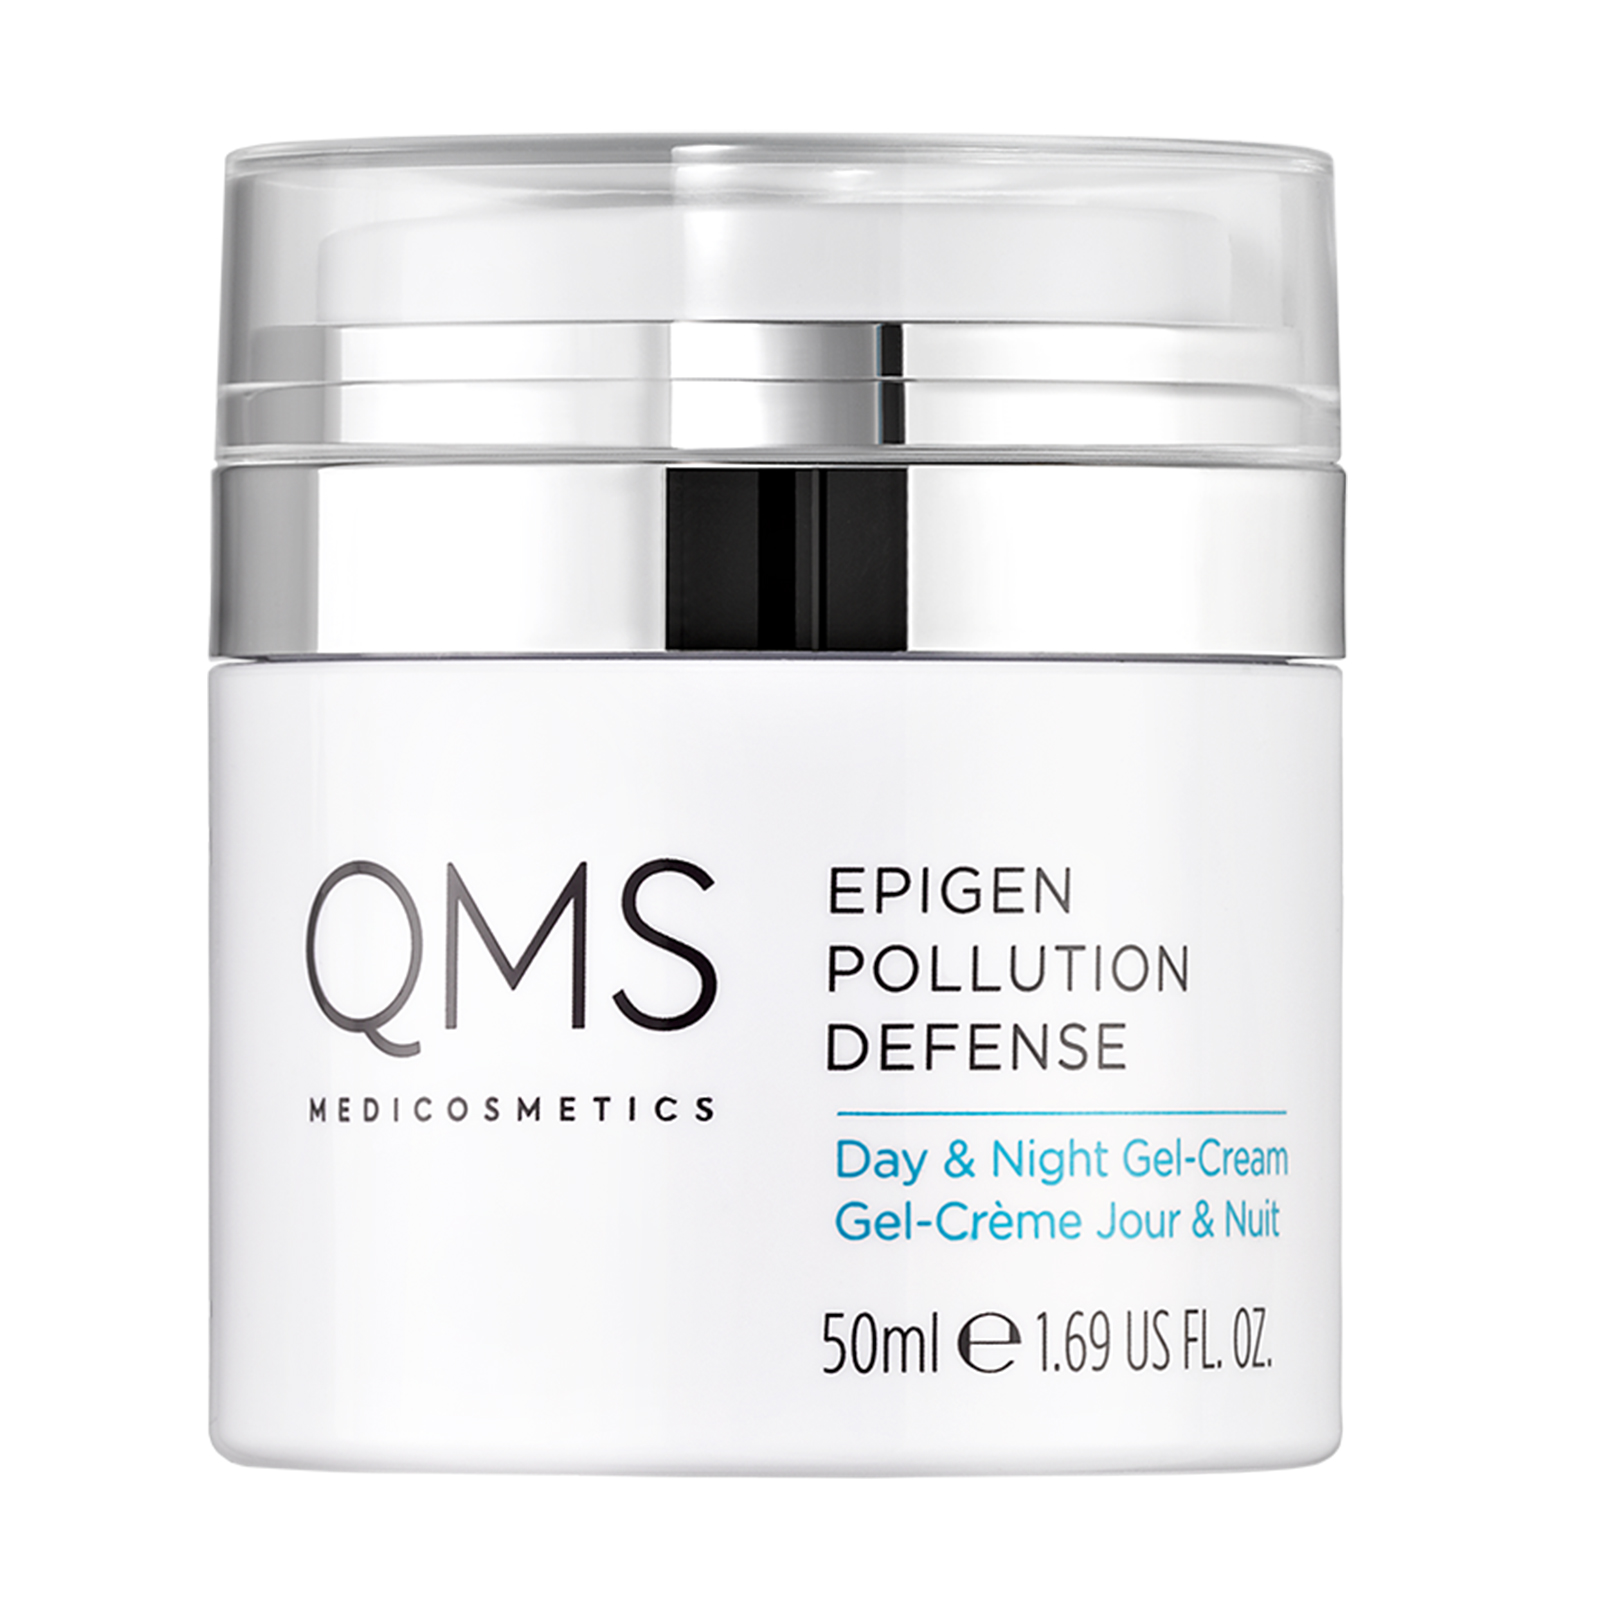 Fallachi beauty – Shop – QMS – Epigen Pollution Defense Day & Night Gel-Cream